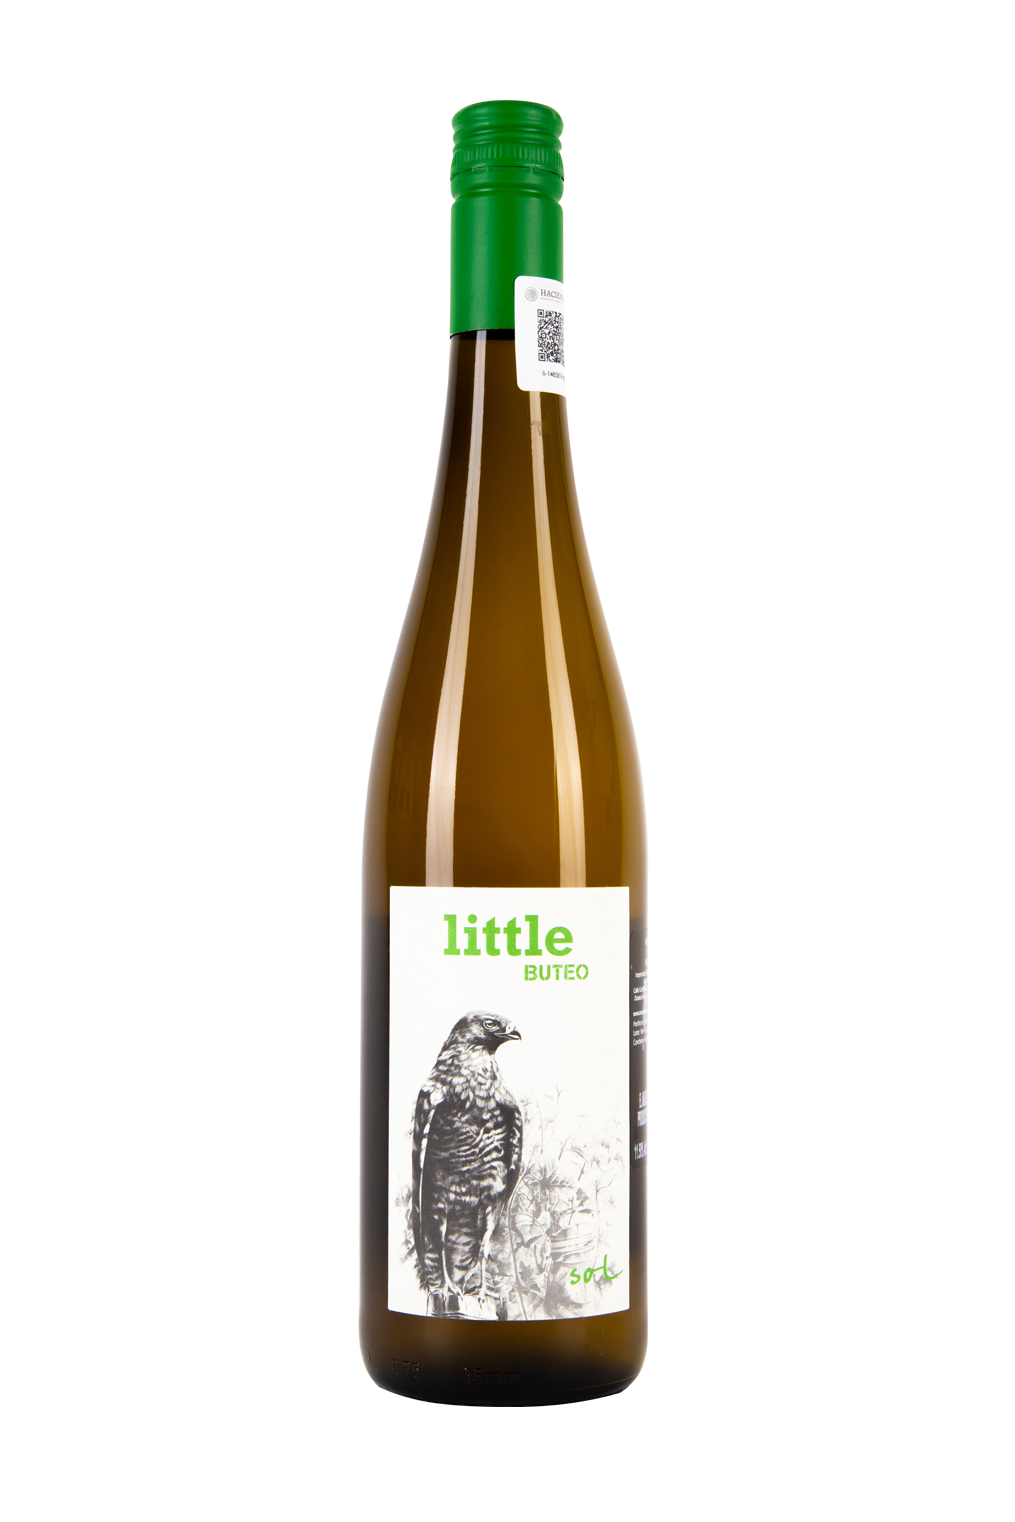 little buteo 2020, michael gindl, vino austriaco, austria, tienda de vino, vino online, comprar vino, vino naranja, vino blanco, vino natural, natural wine, salvaje vinos